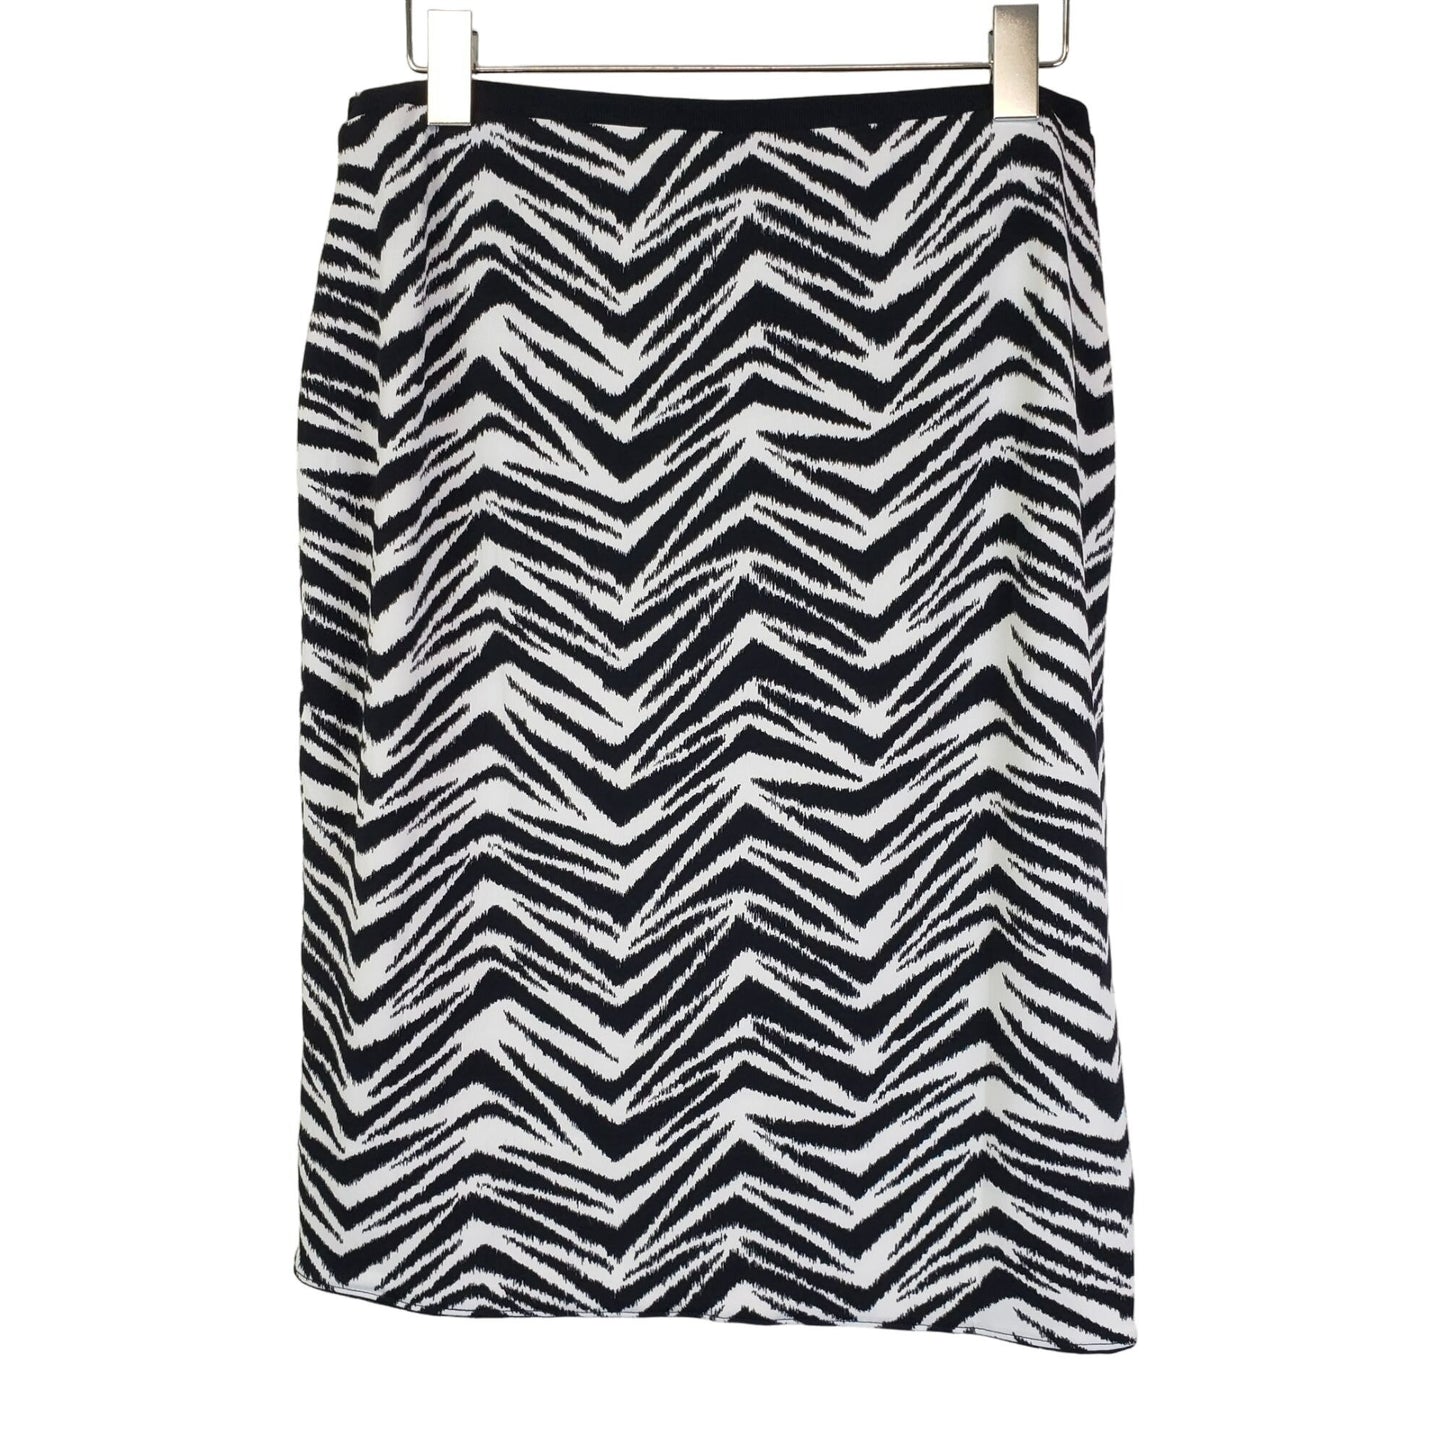 WHBM Zebra Print Pencil Skirt Size Small